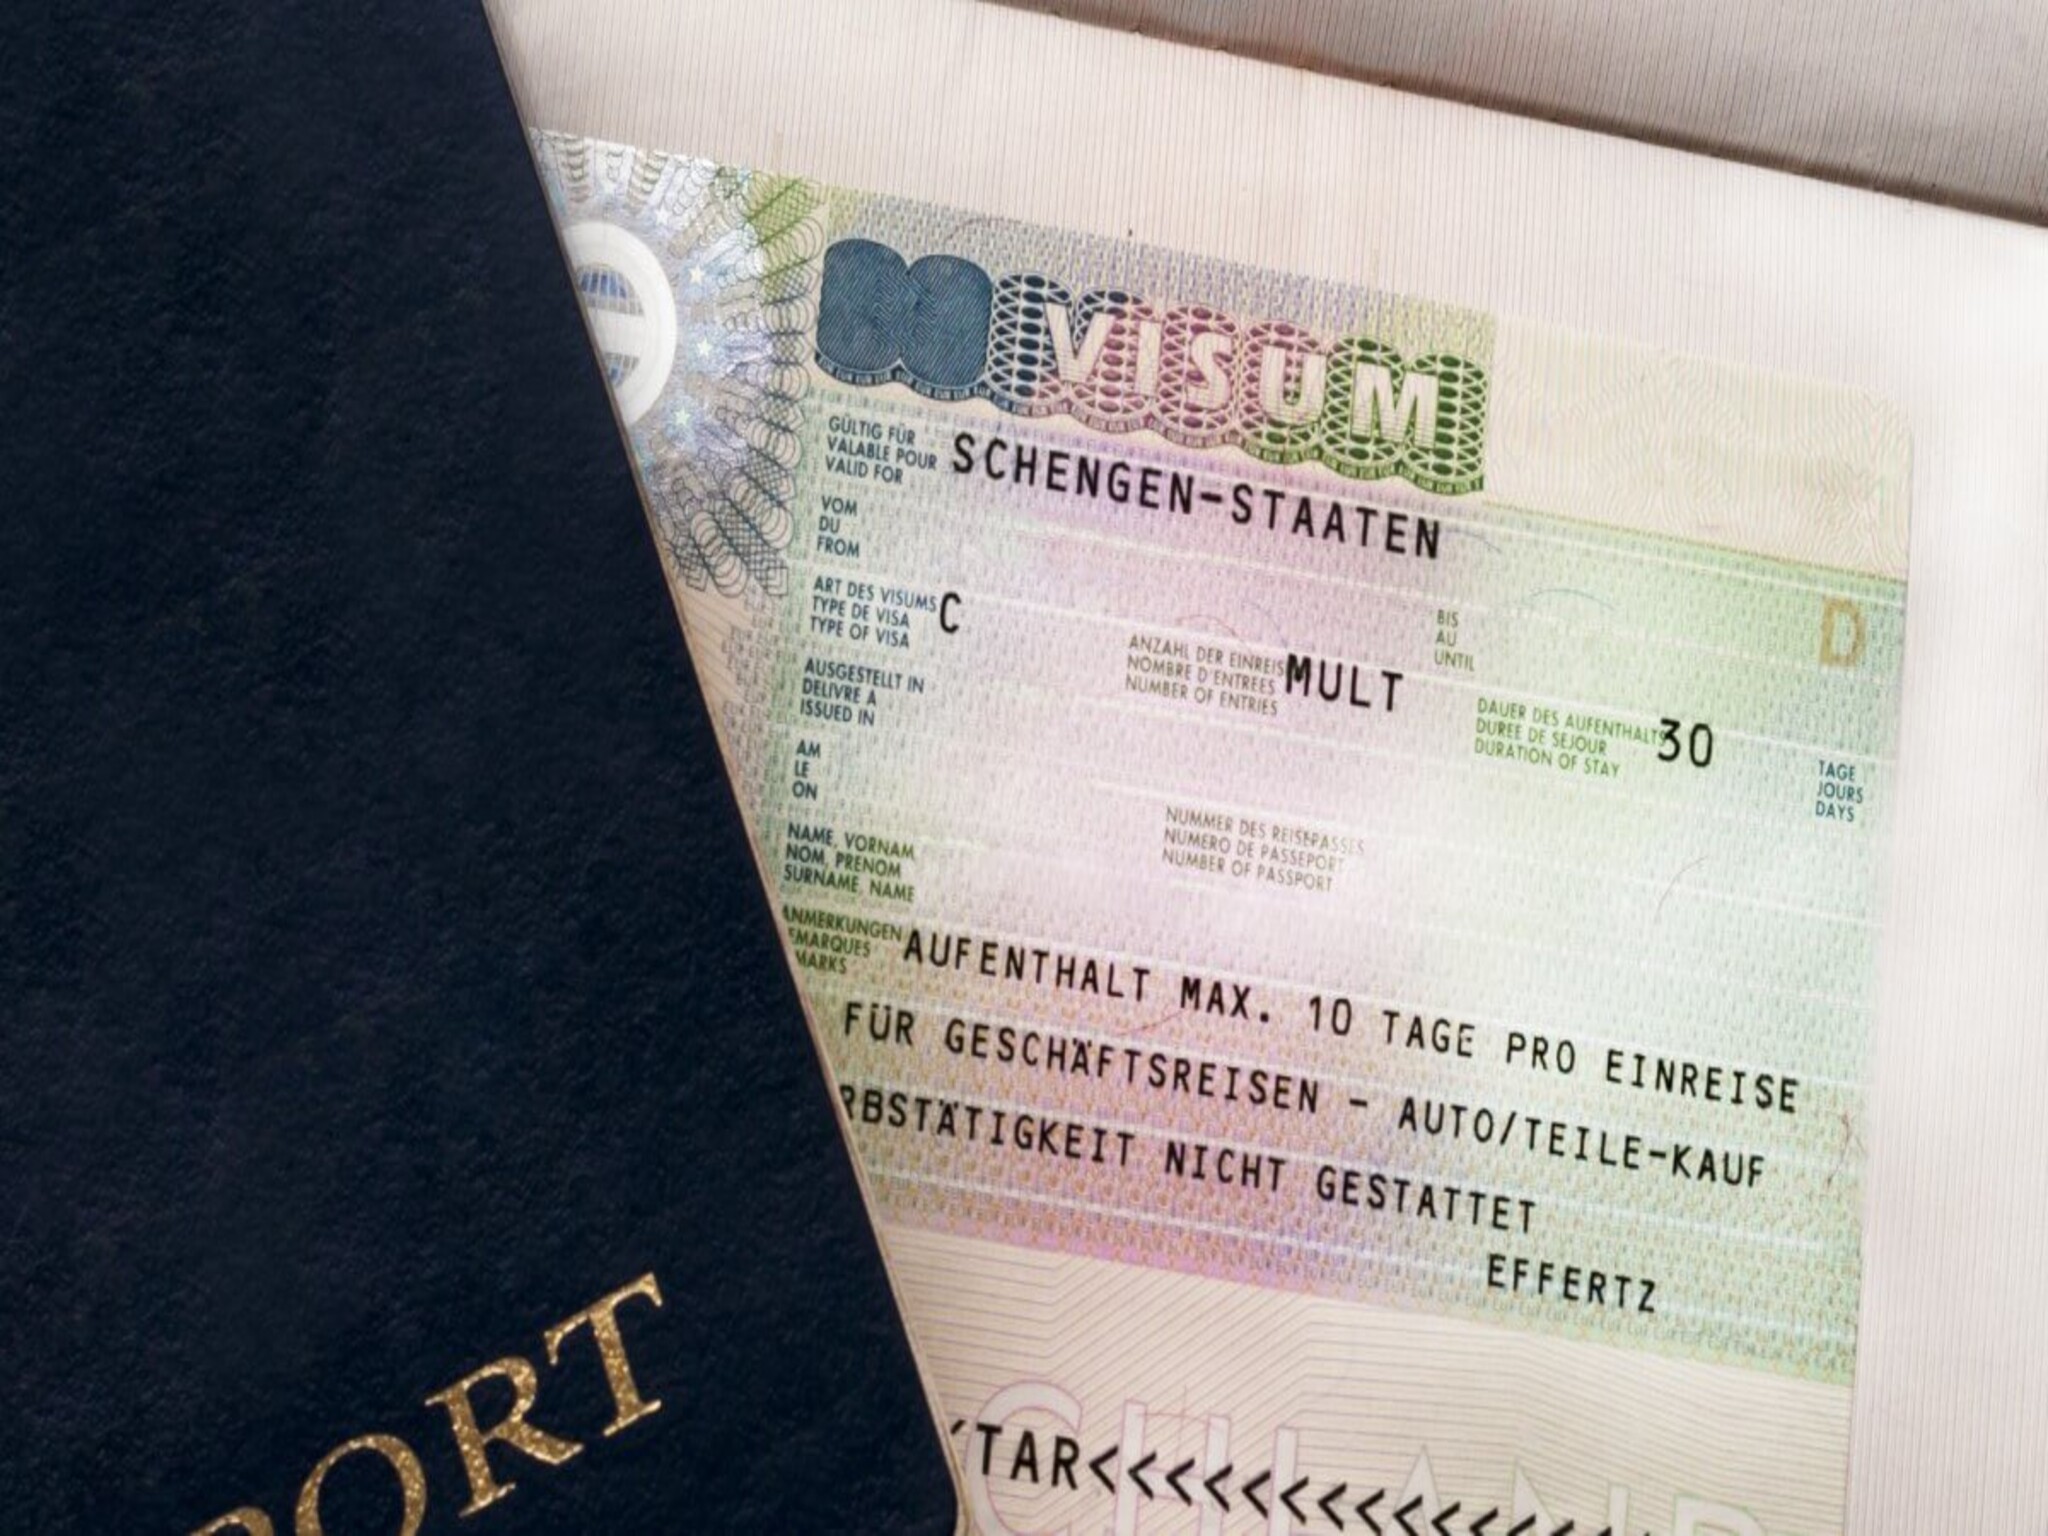 The reasons for delays in obtaining Schengen visas